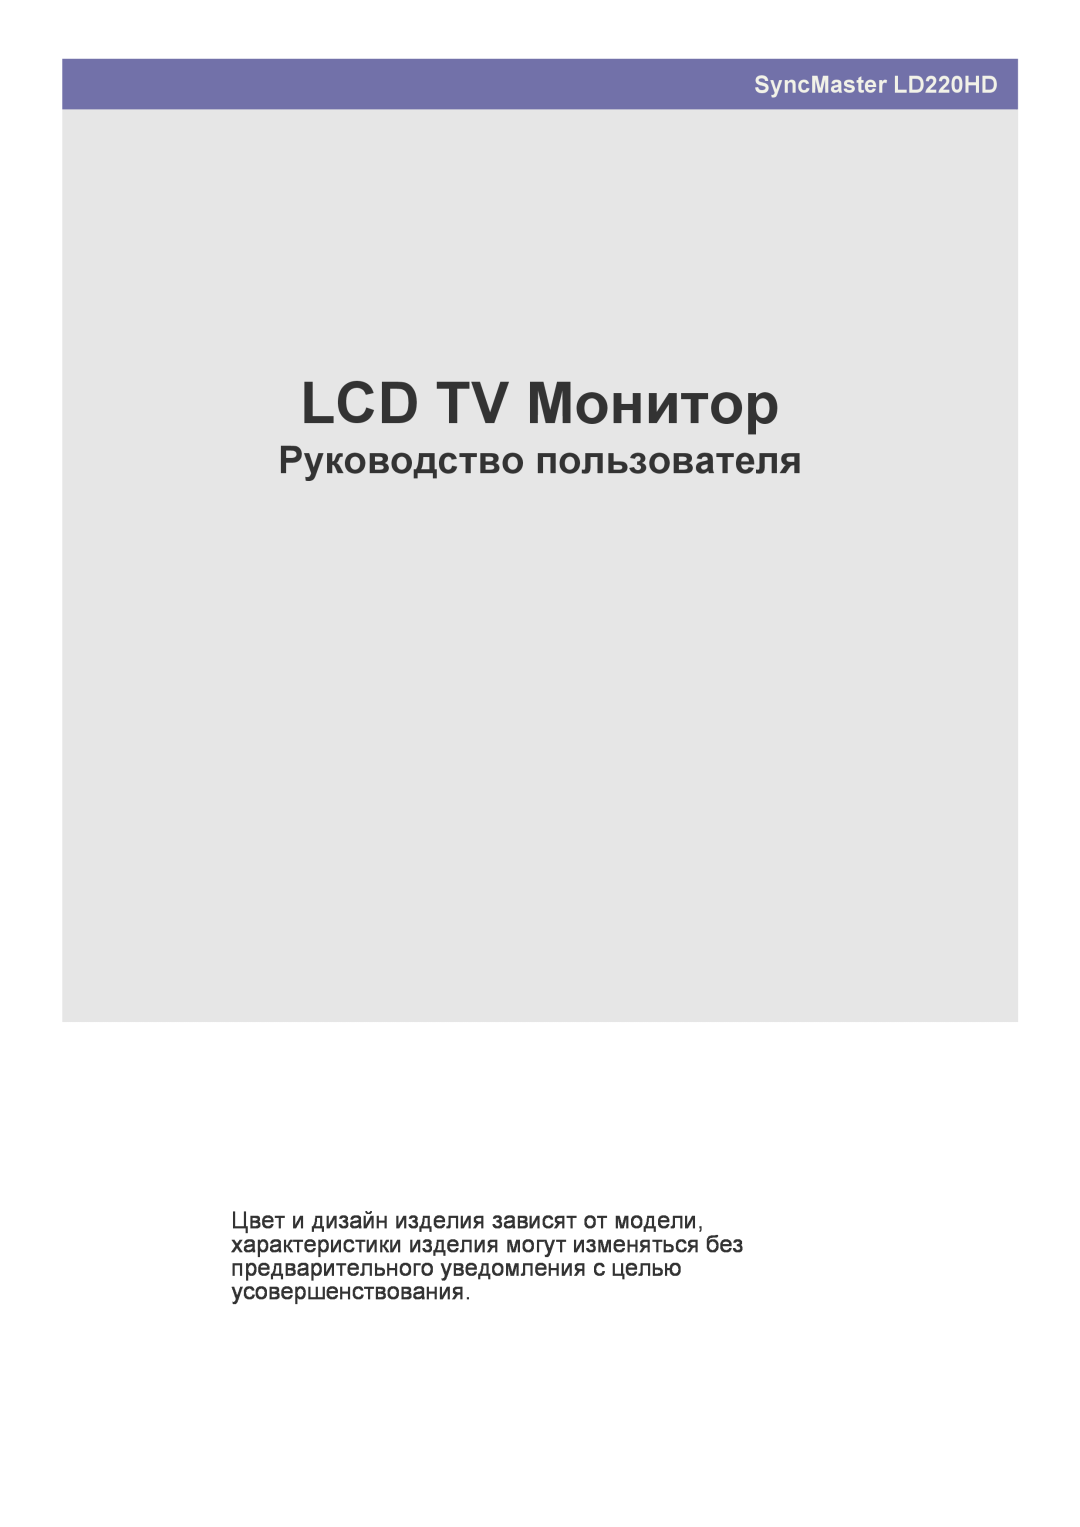 Samsung LS22FMDGF/EN manual Monitor LCD TV, Manual del usuario, SyncMaster LD220HD 